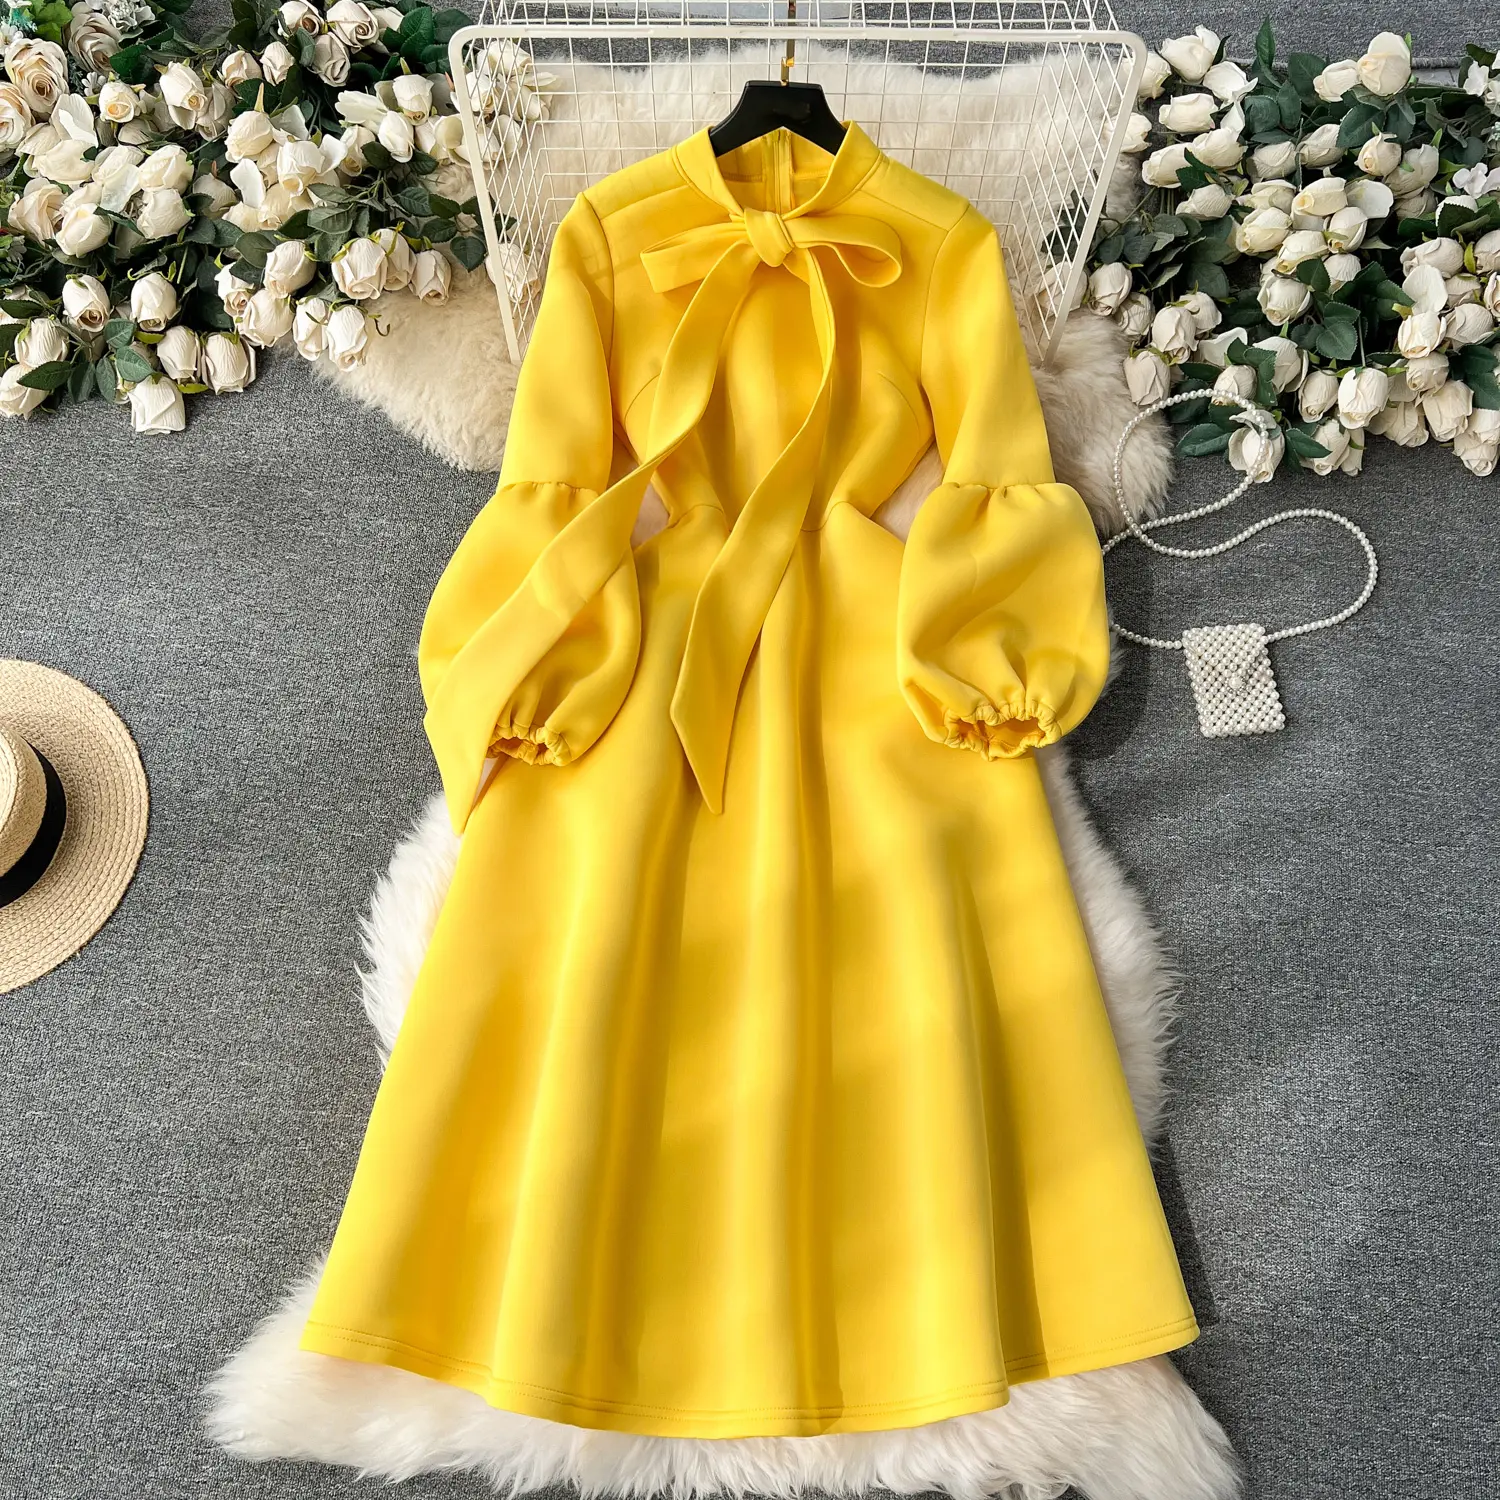 Customized Party Dress Women's Fashion Bow Lantern Long sleeved Waist Tie up Large yellow Dress